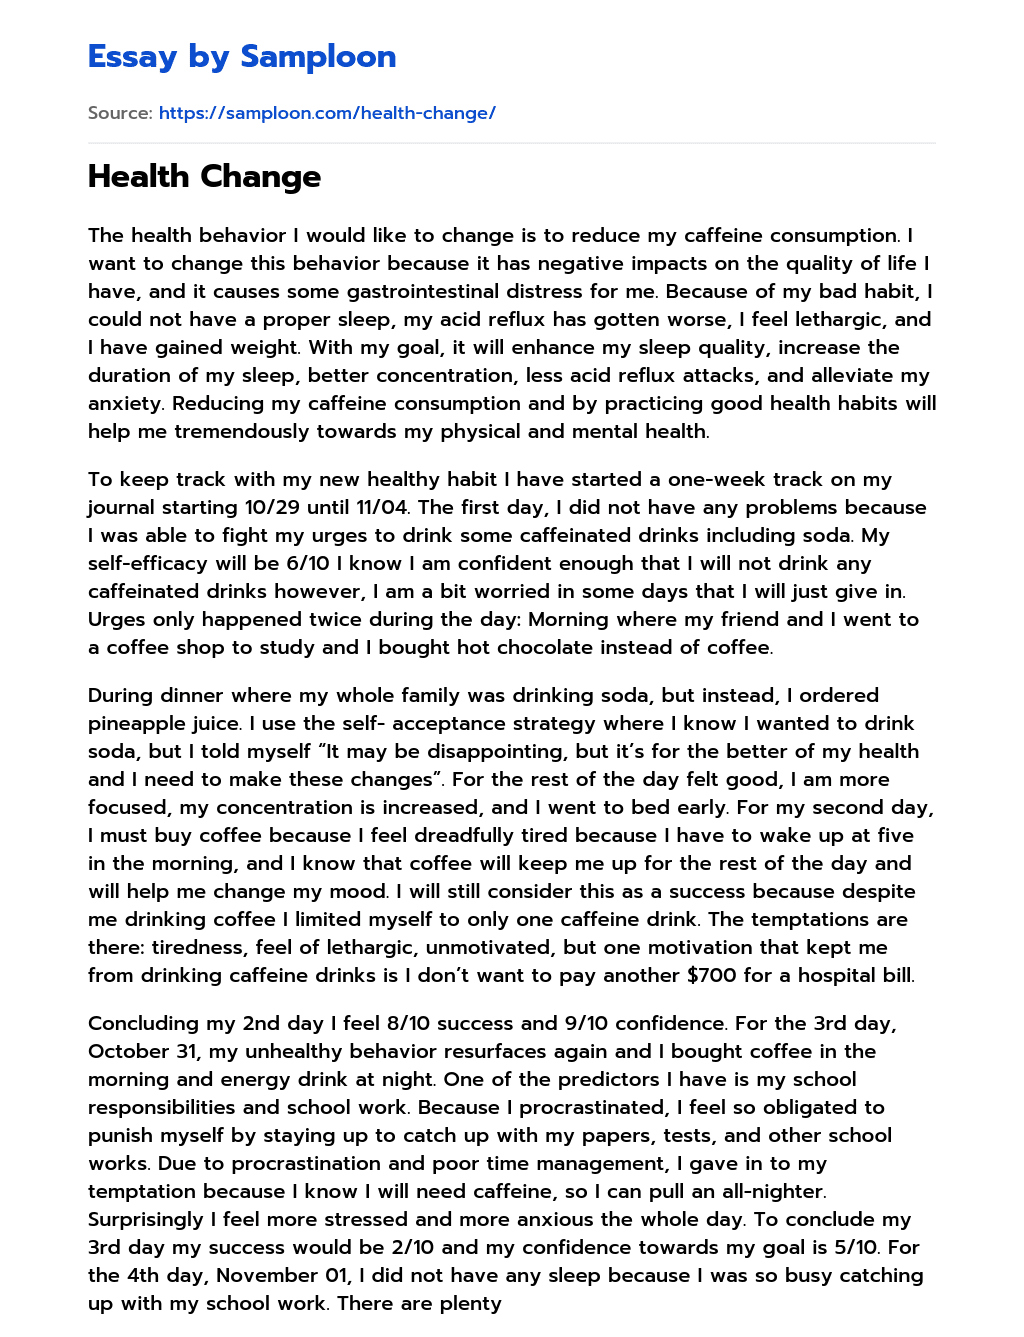 Health Change essay